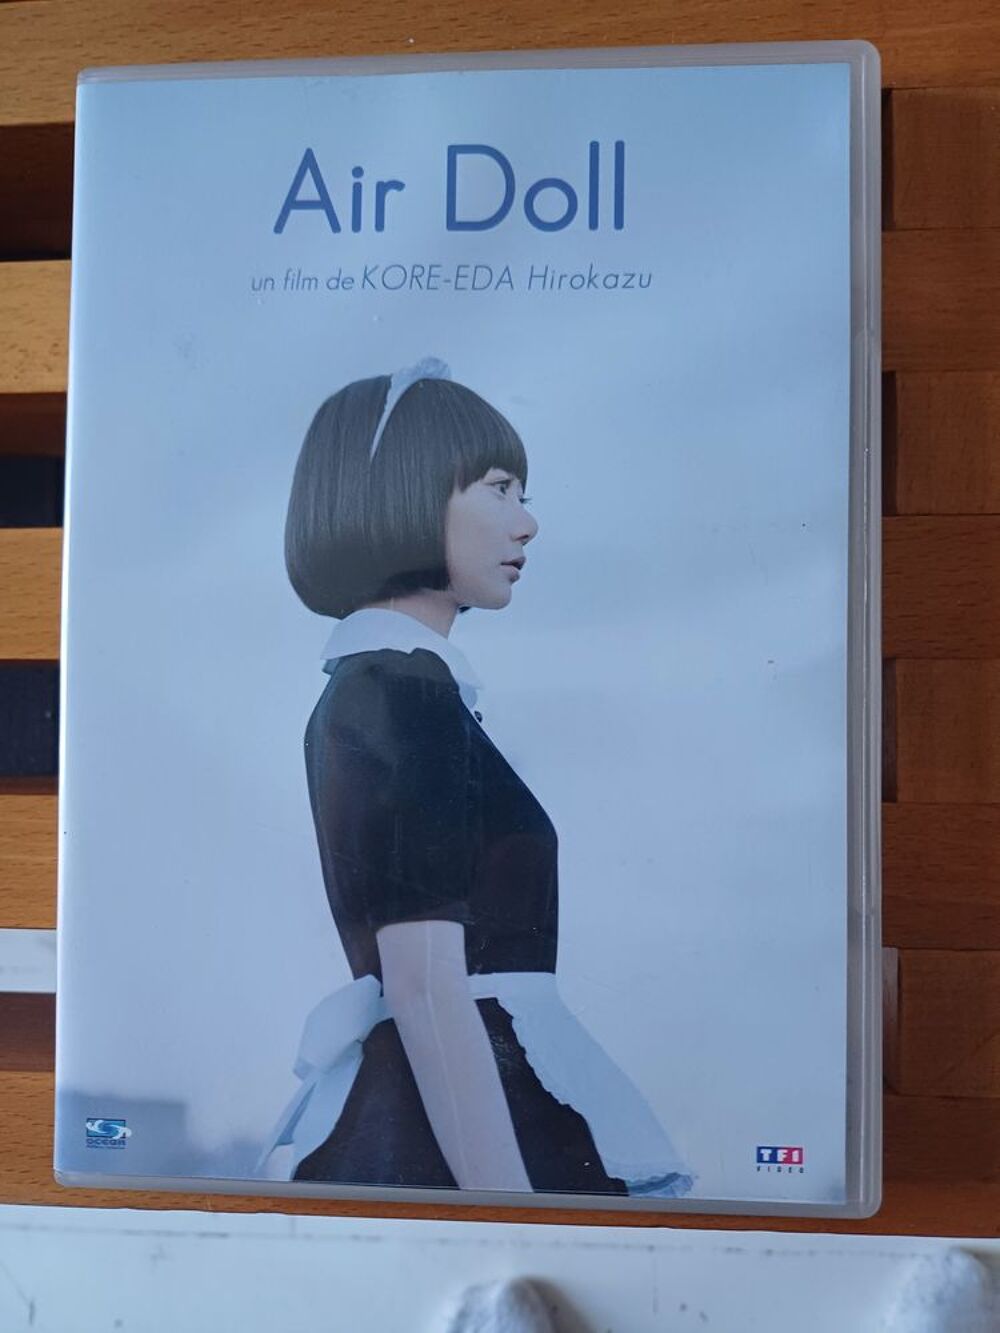 DVD Air Doll - Hirokazu Kore-Eda
DVD et blu-ray